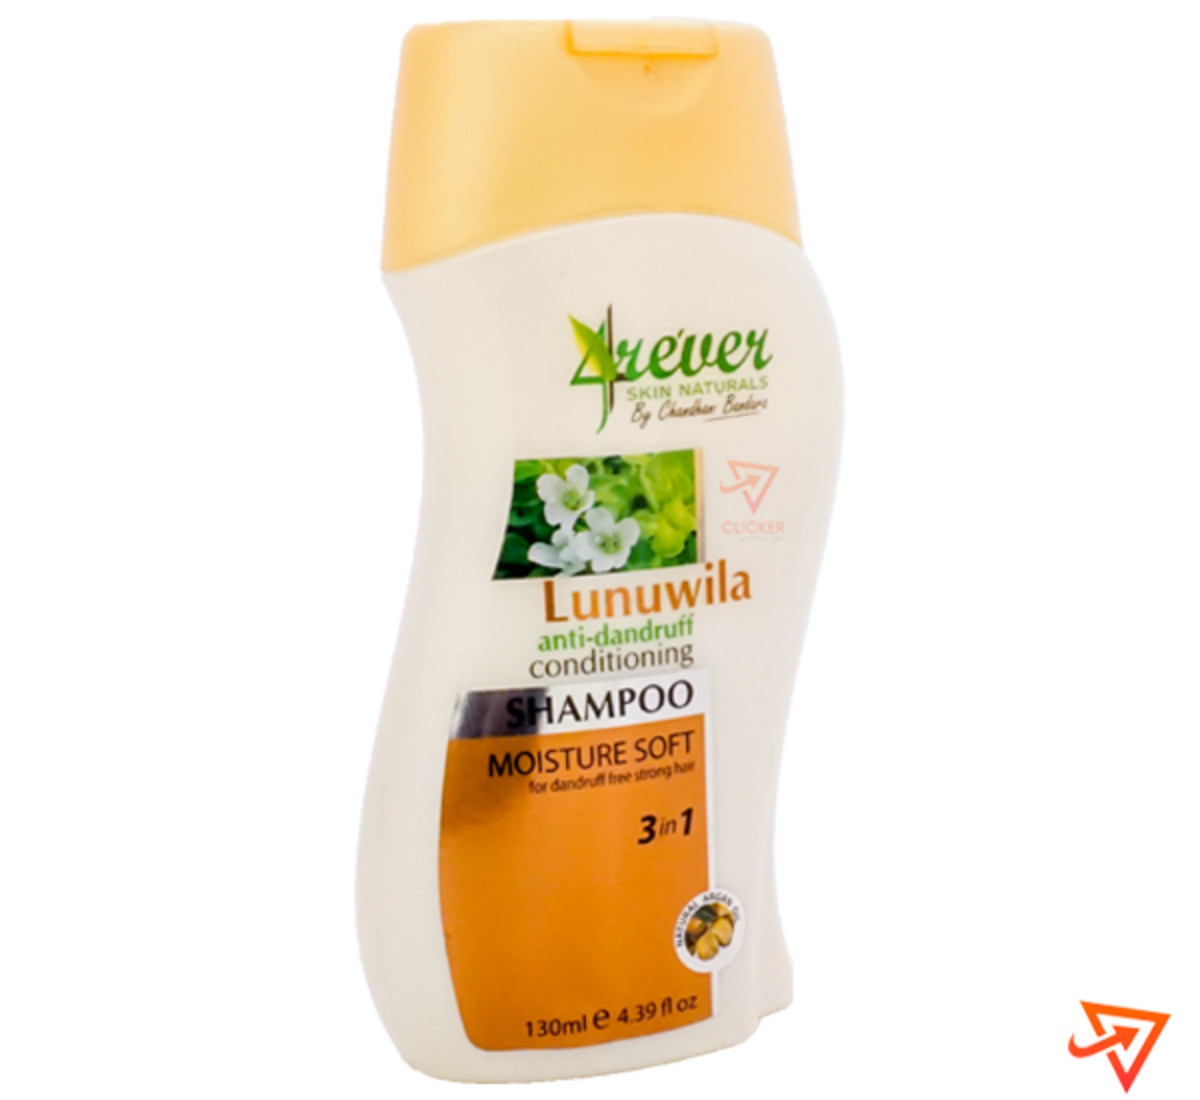 Clicker product 130ml 4REVER lunuwila anti-dandruff shampoo 1055